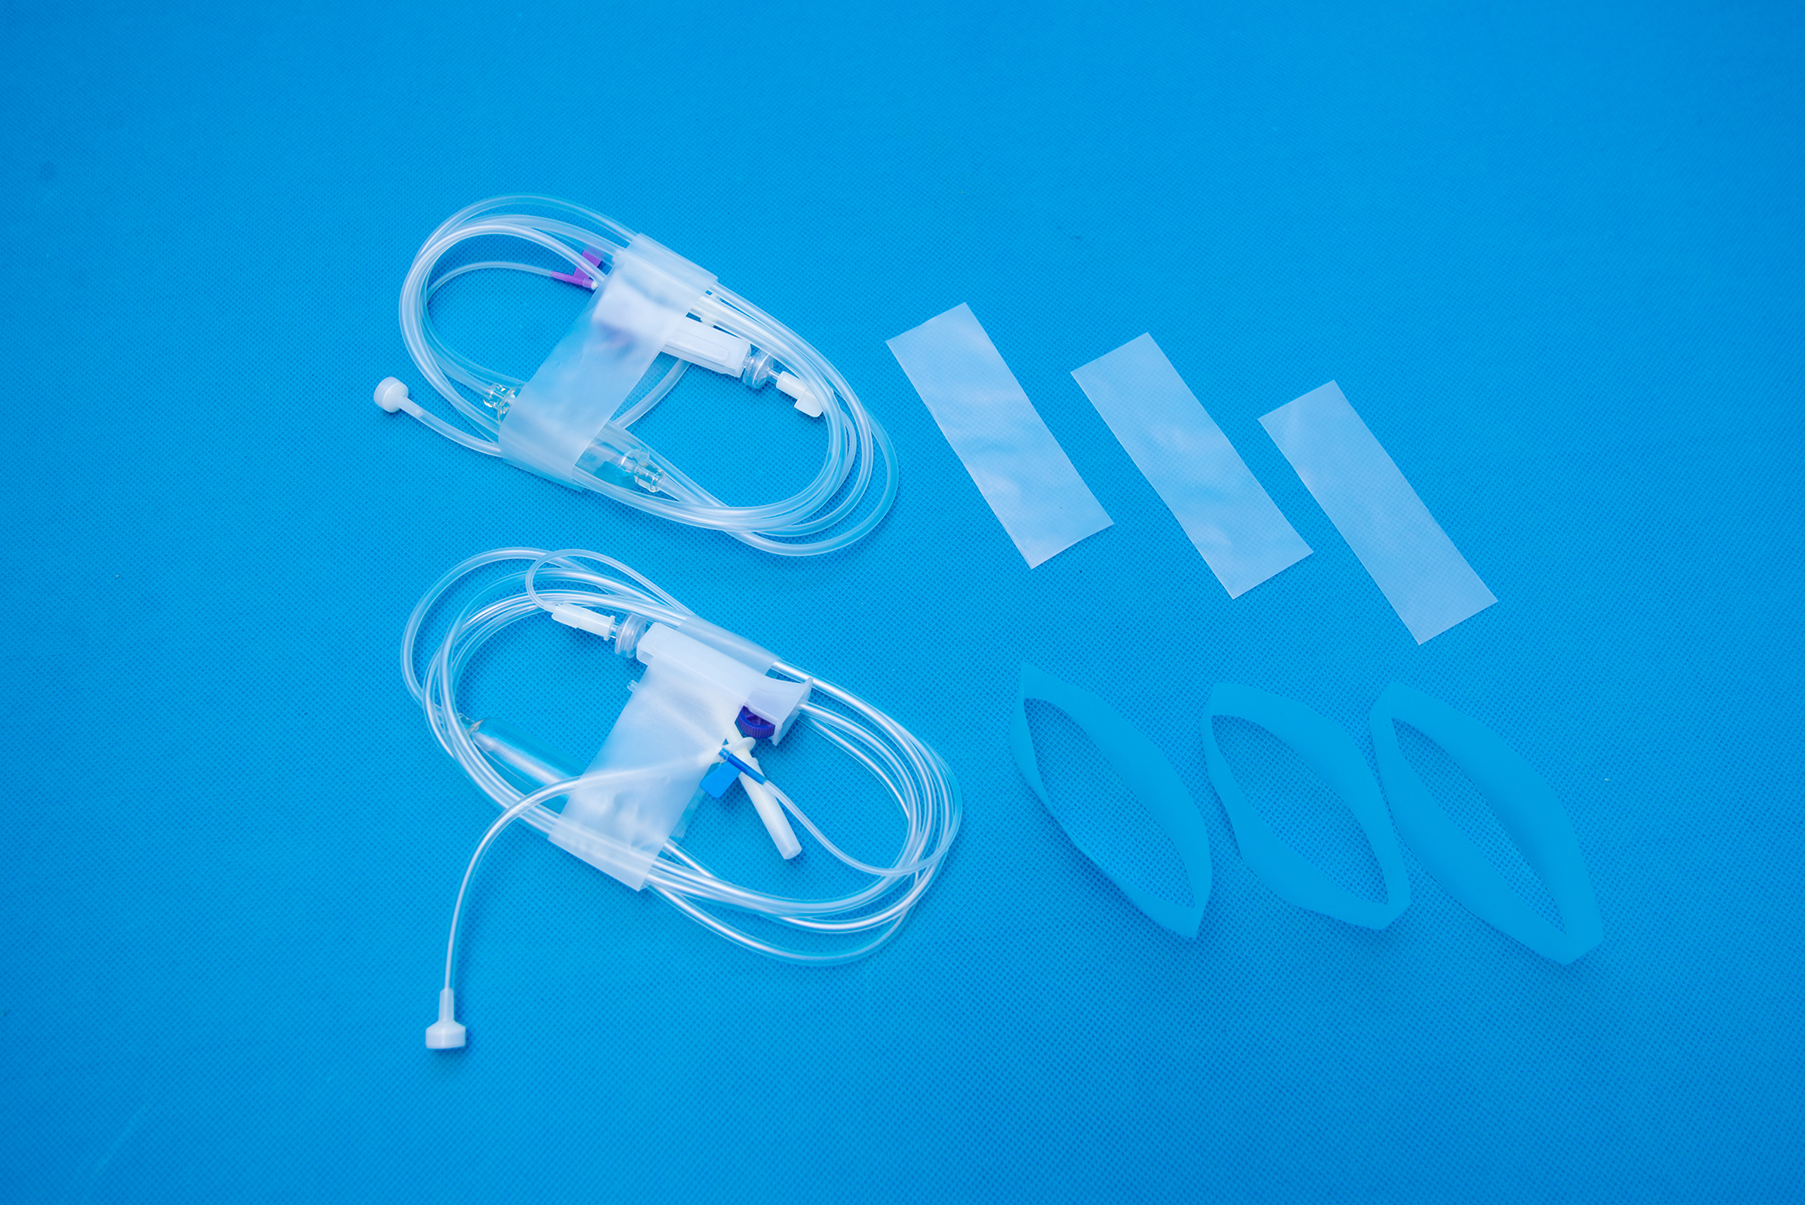 Catheter fixed – banderole